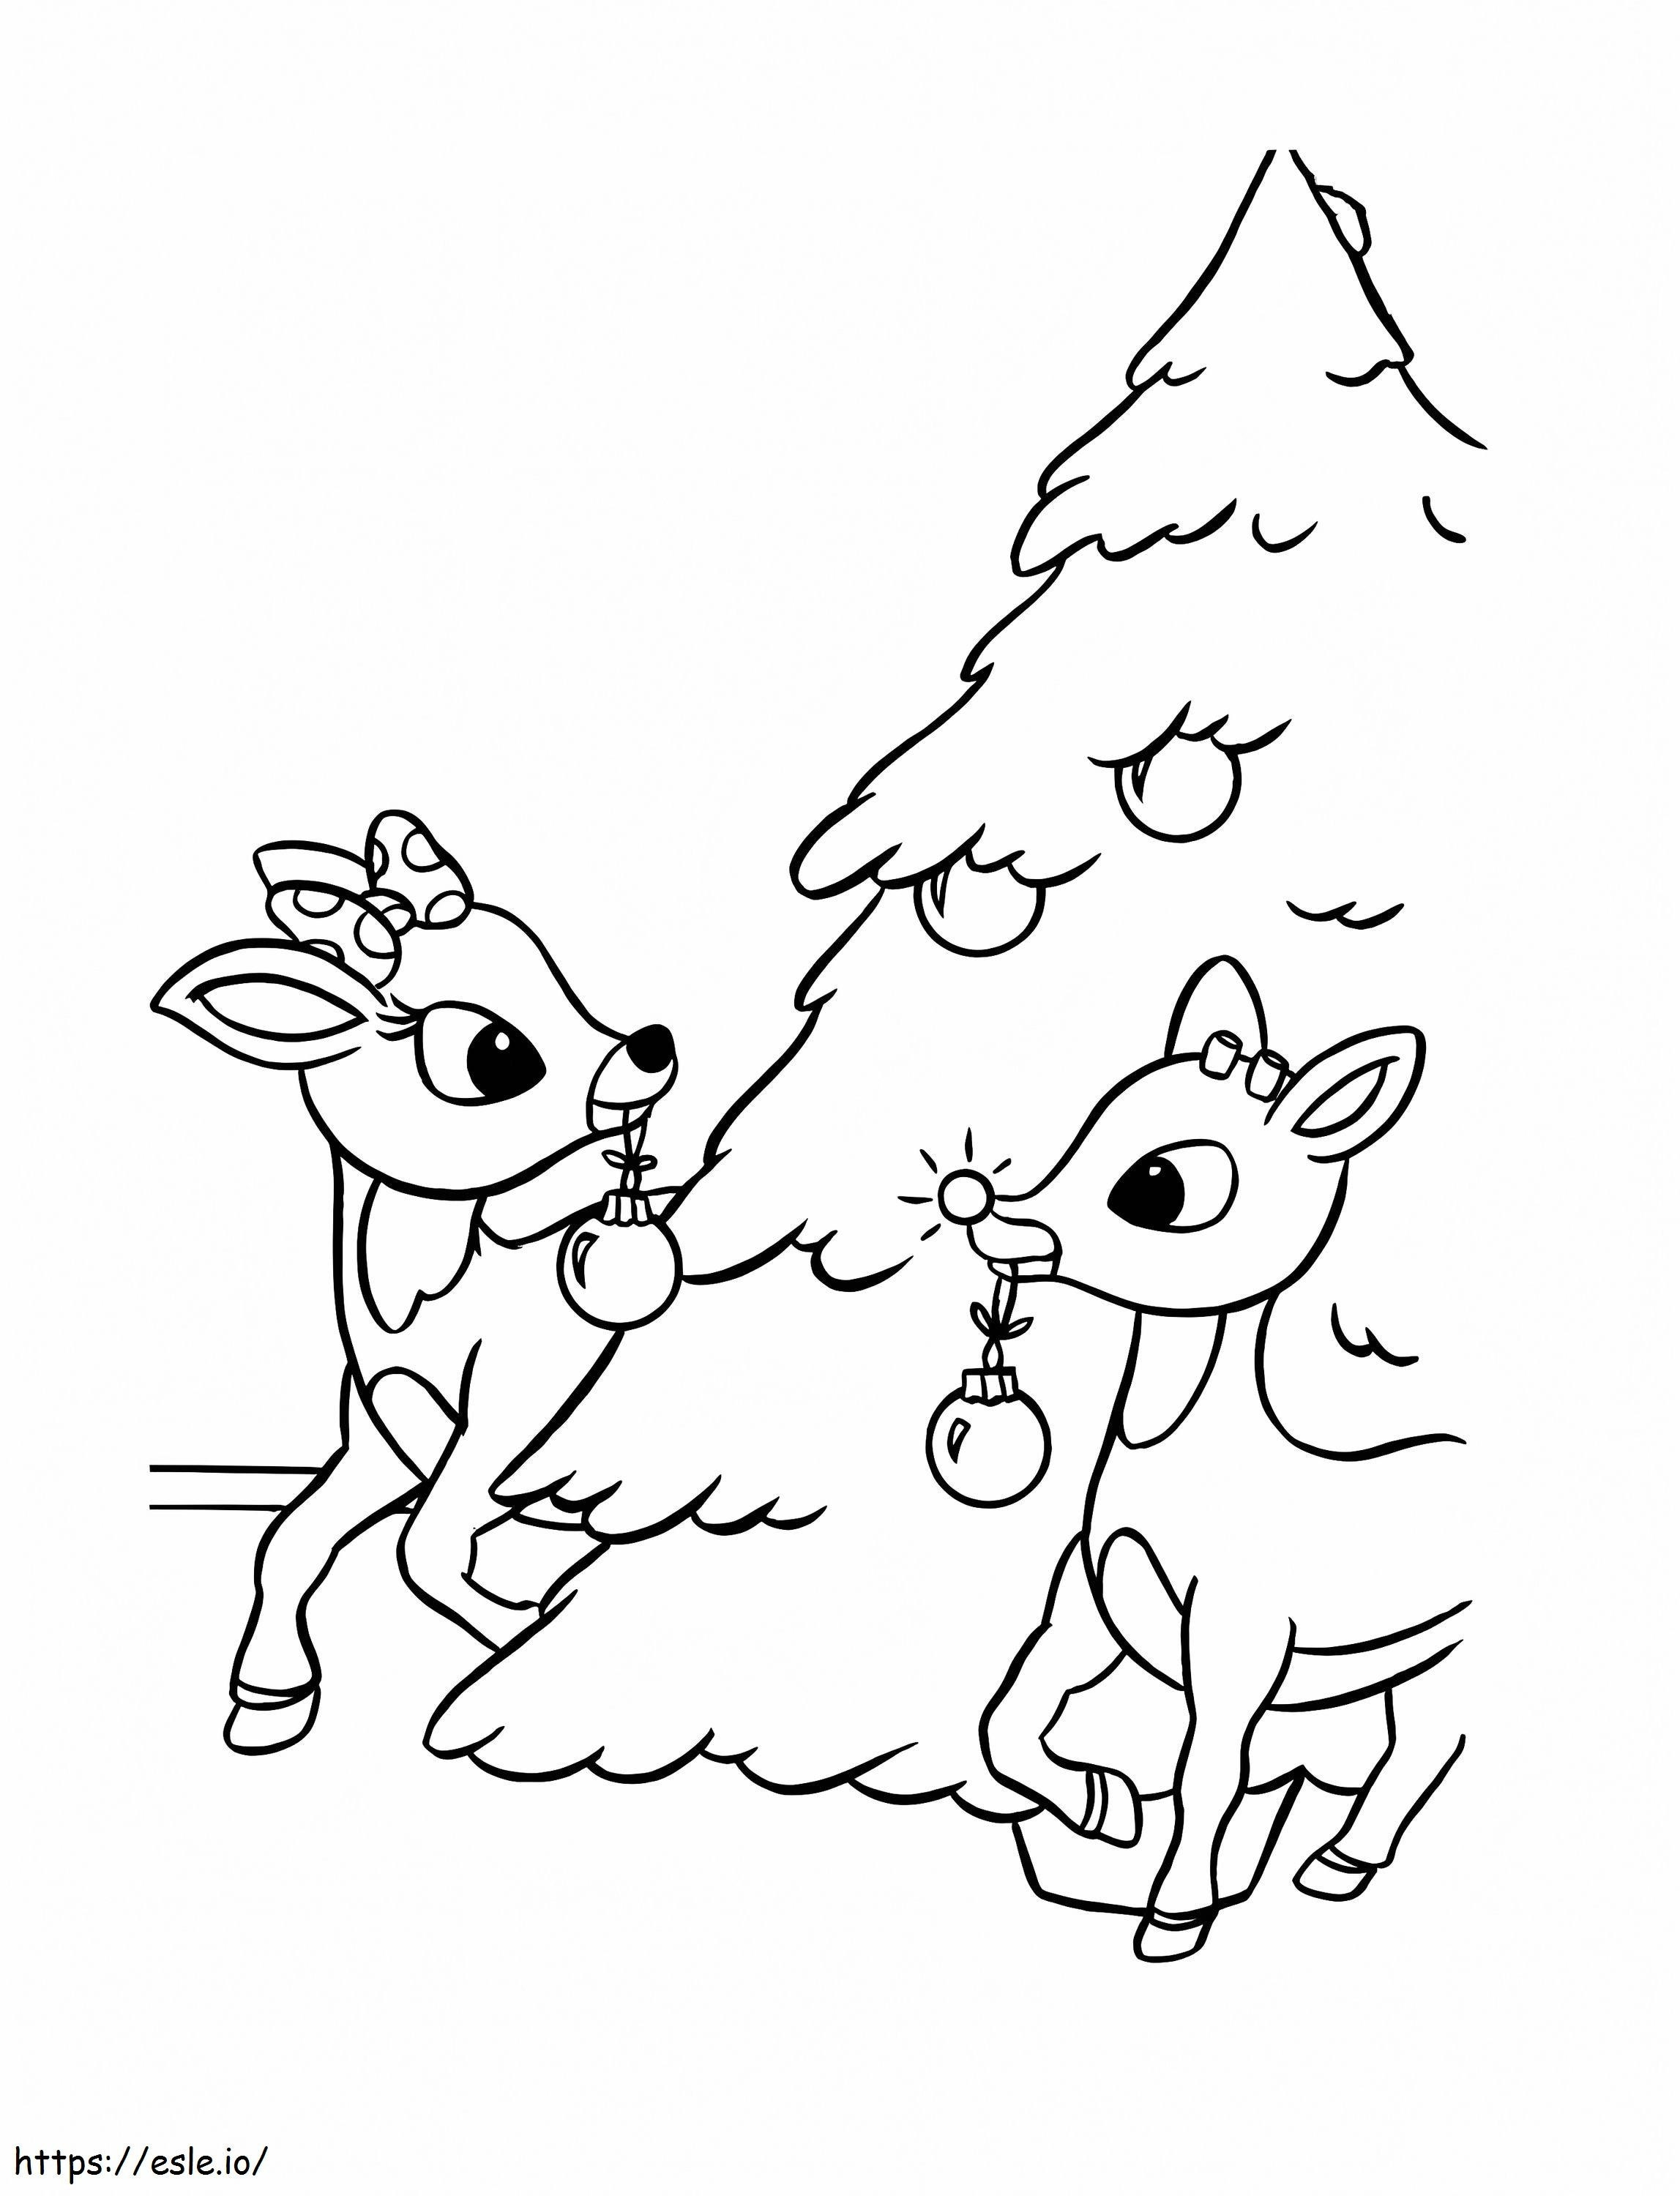 Rodolfo e árvore de Natal para colorir